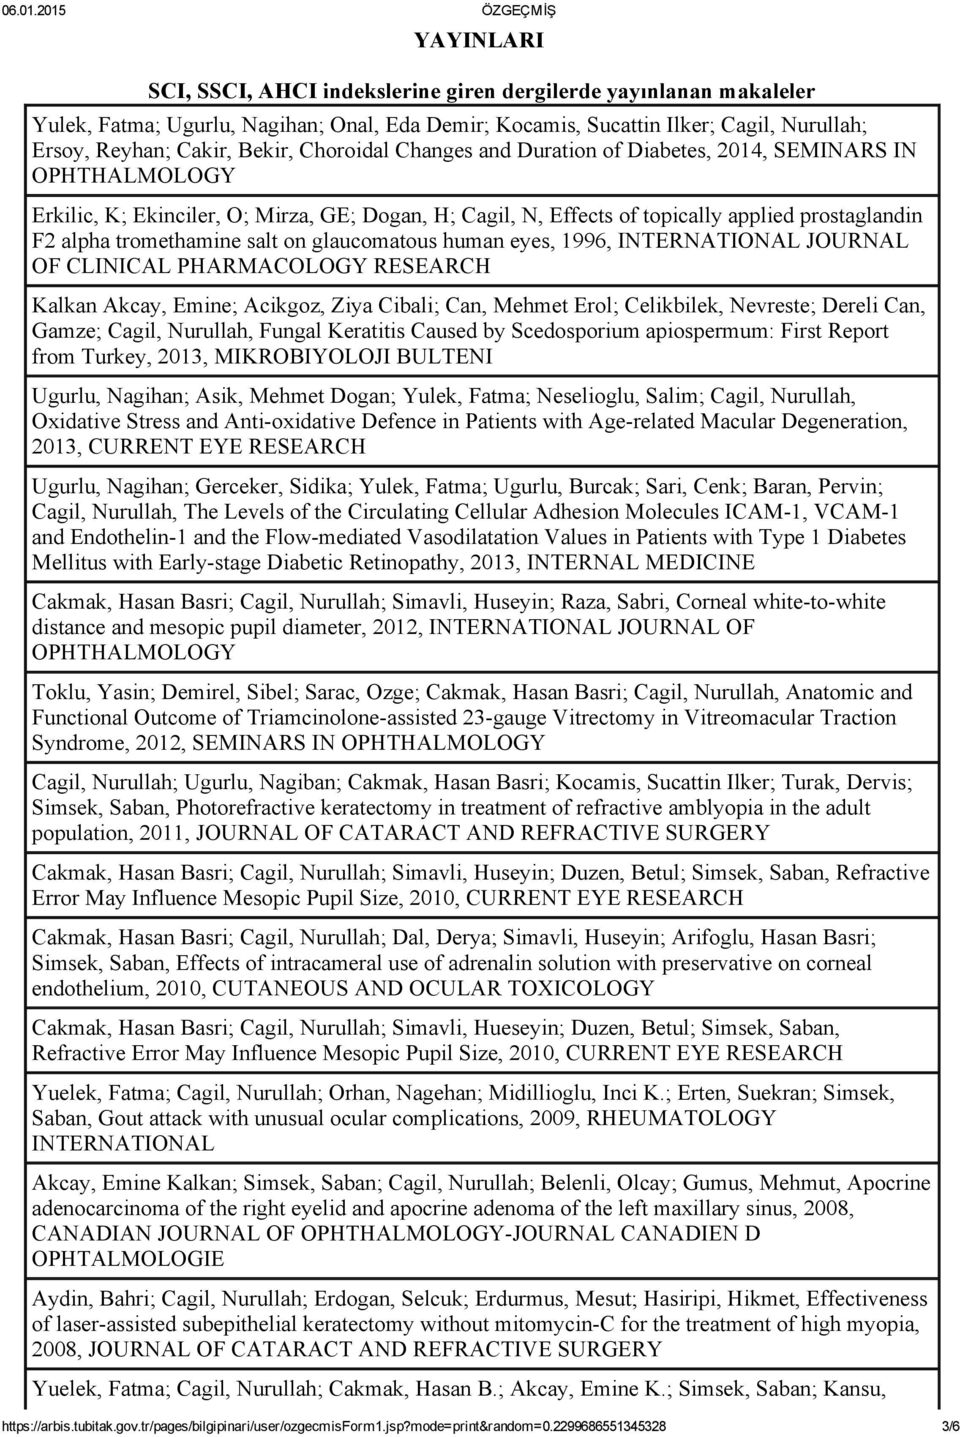 salt on glaucomatous human eyes, 1996, INTERNATIONAL JOURNAL OF CLINICAL PHARMACOLOGY RESEARCH Kalkan Akcay, Emine; Acikgoz, Ziya Cibali; Can, Mehmet Erol; Celikbilek, Nevreste; Dereli Can, Gamze;